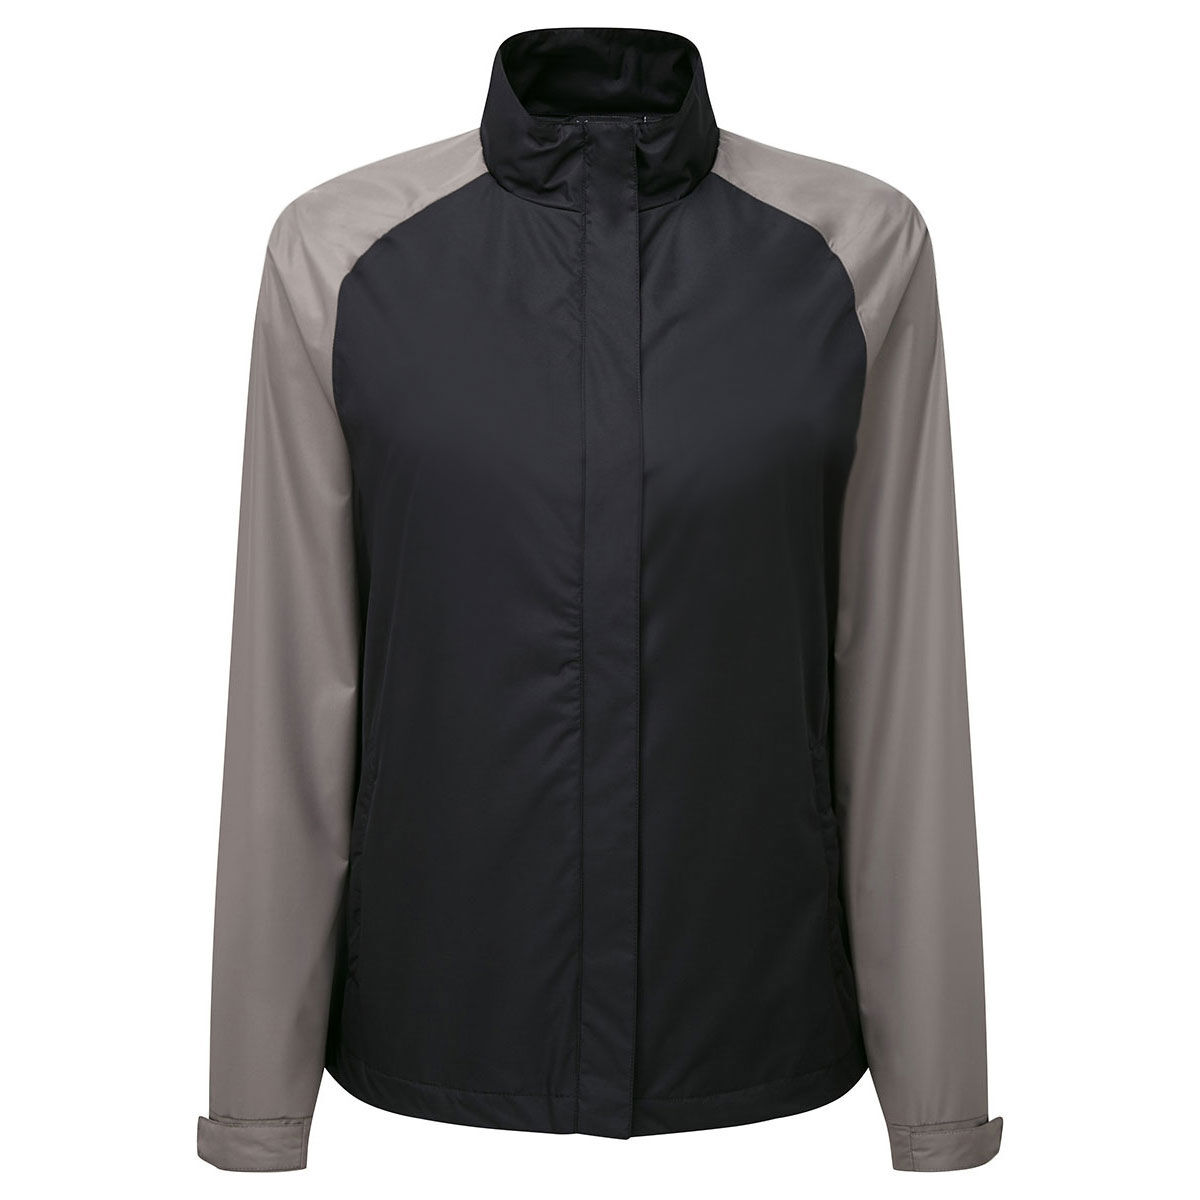 Palm Grove Unisex Waterproof Suit, Womens, Small/medium, Black/grey  | Online Golf